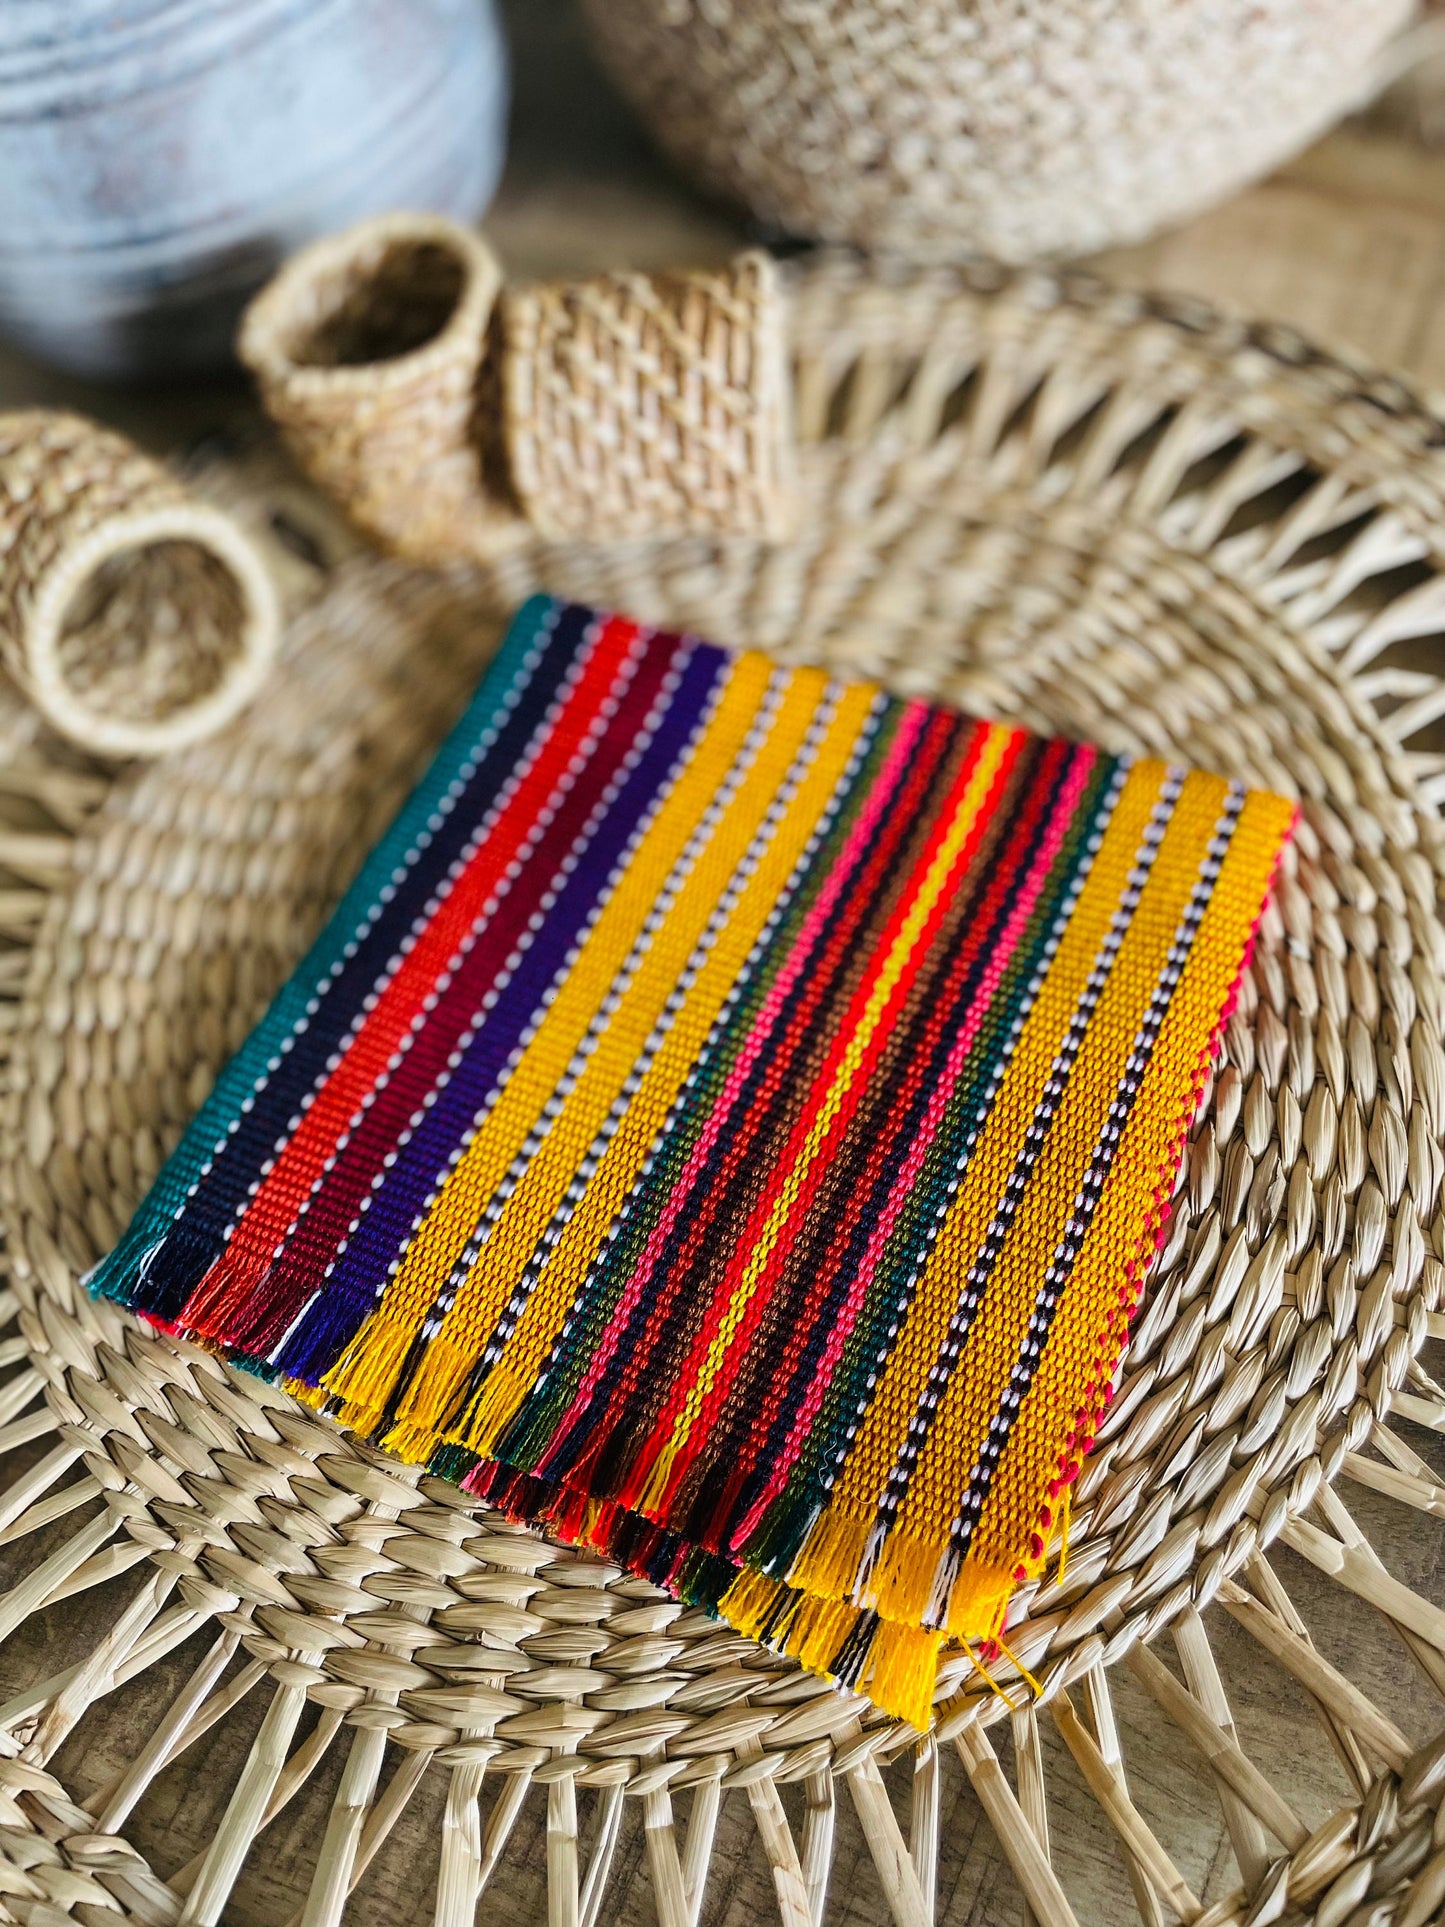 Colorful handwoven napkins